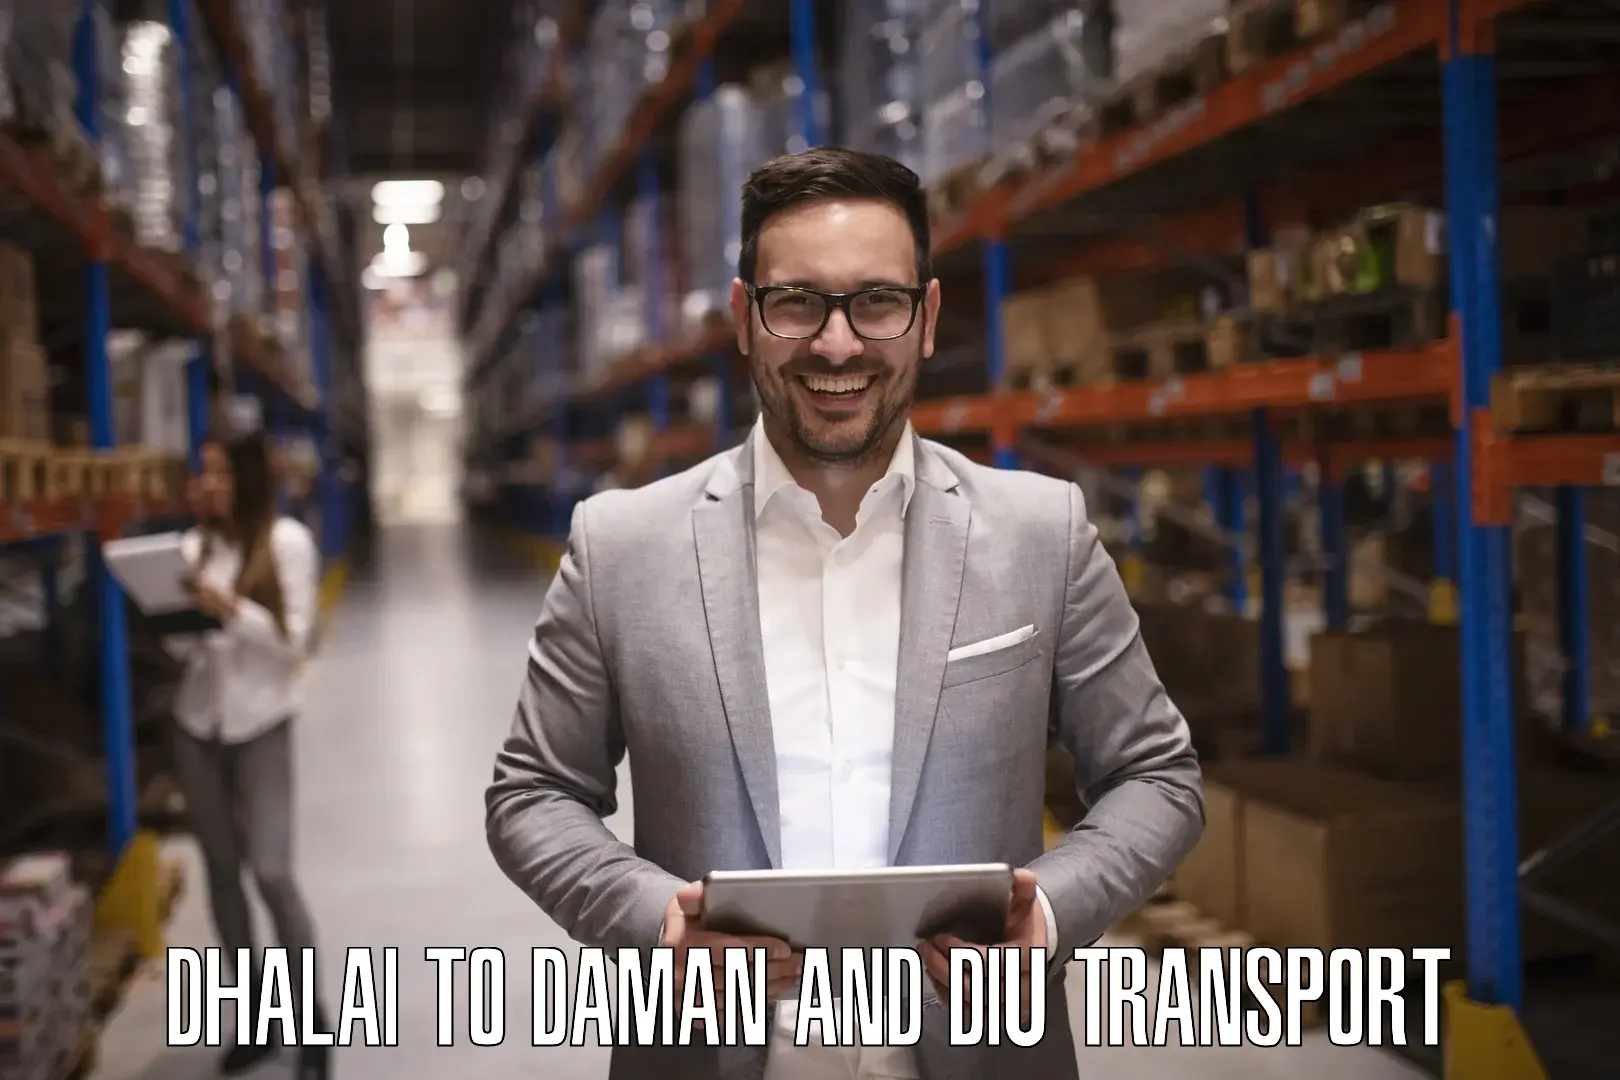 Shipping partner Dhalai to Diu